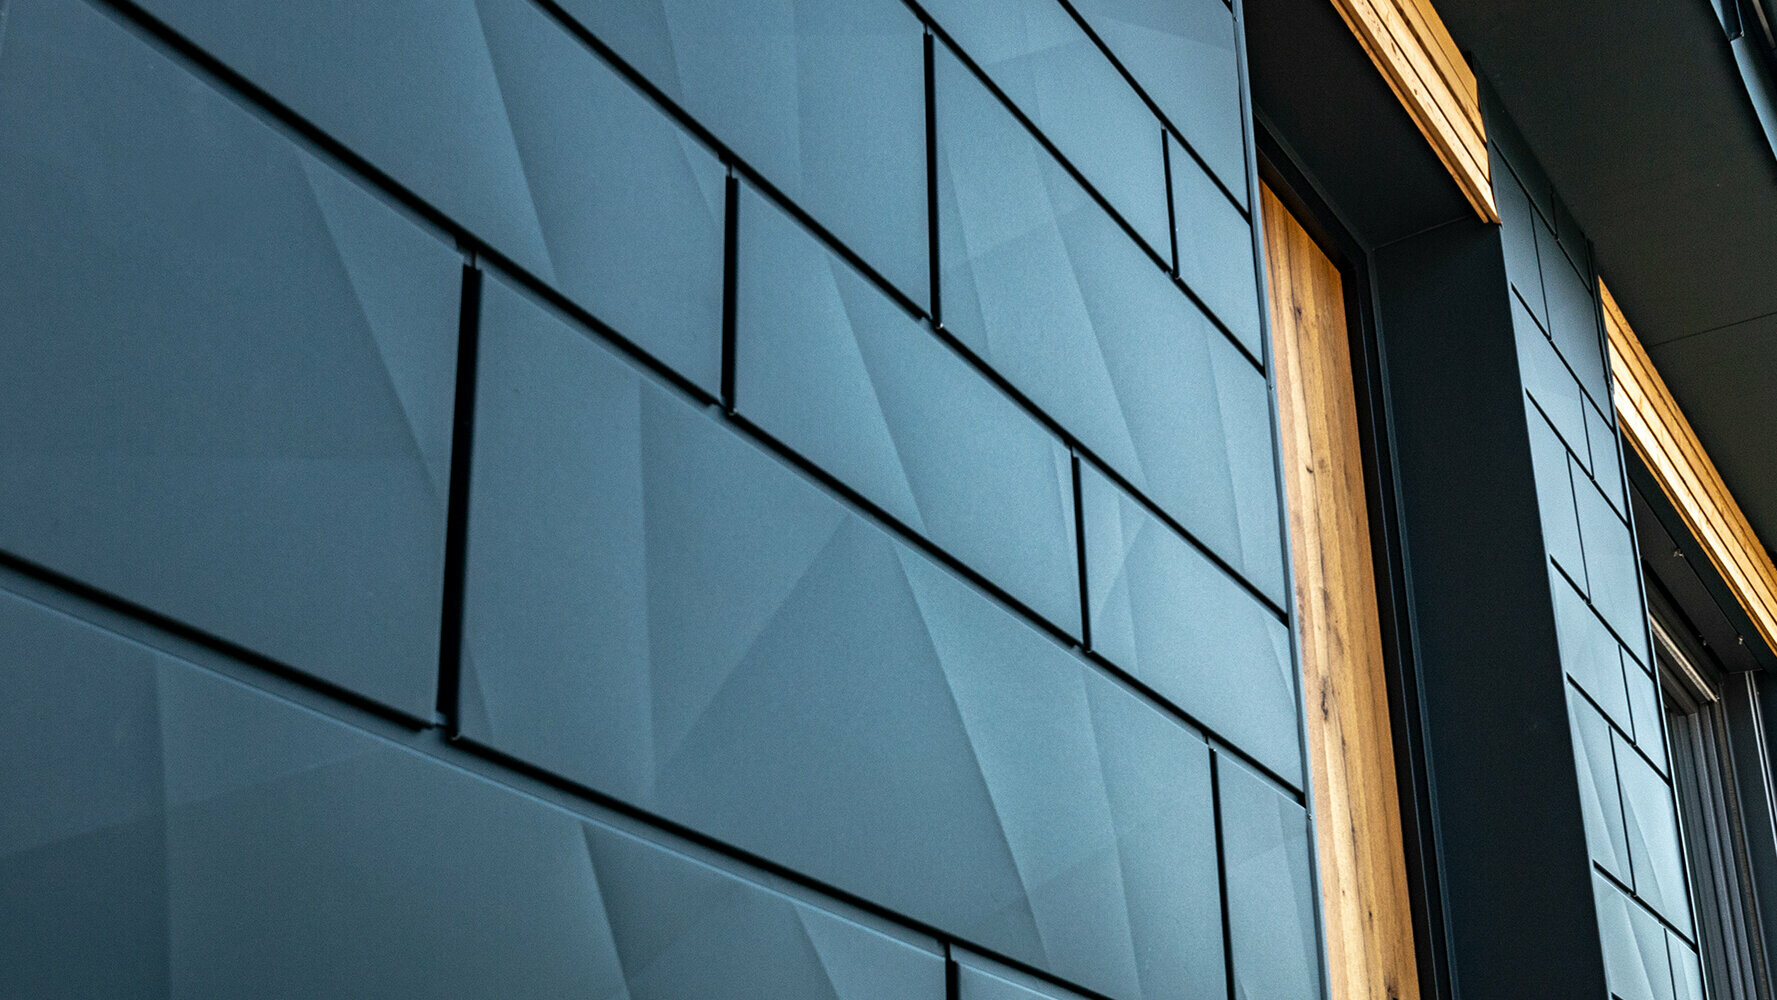 PREFA fasadni paneli s efektom prelamanja; PREFA aluminijski panel Siding.X u antracit boji kombiniran s drvenom fasadom.